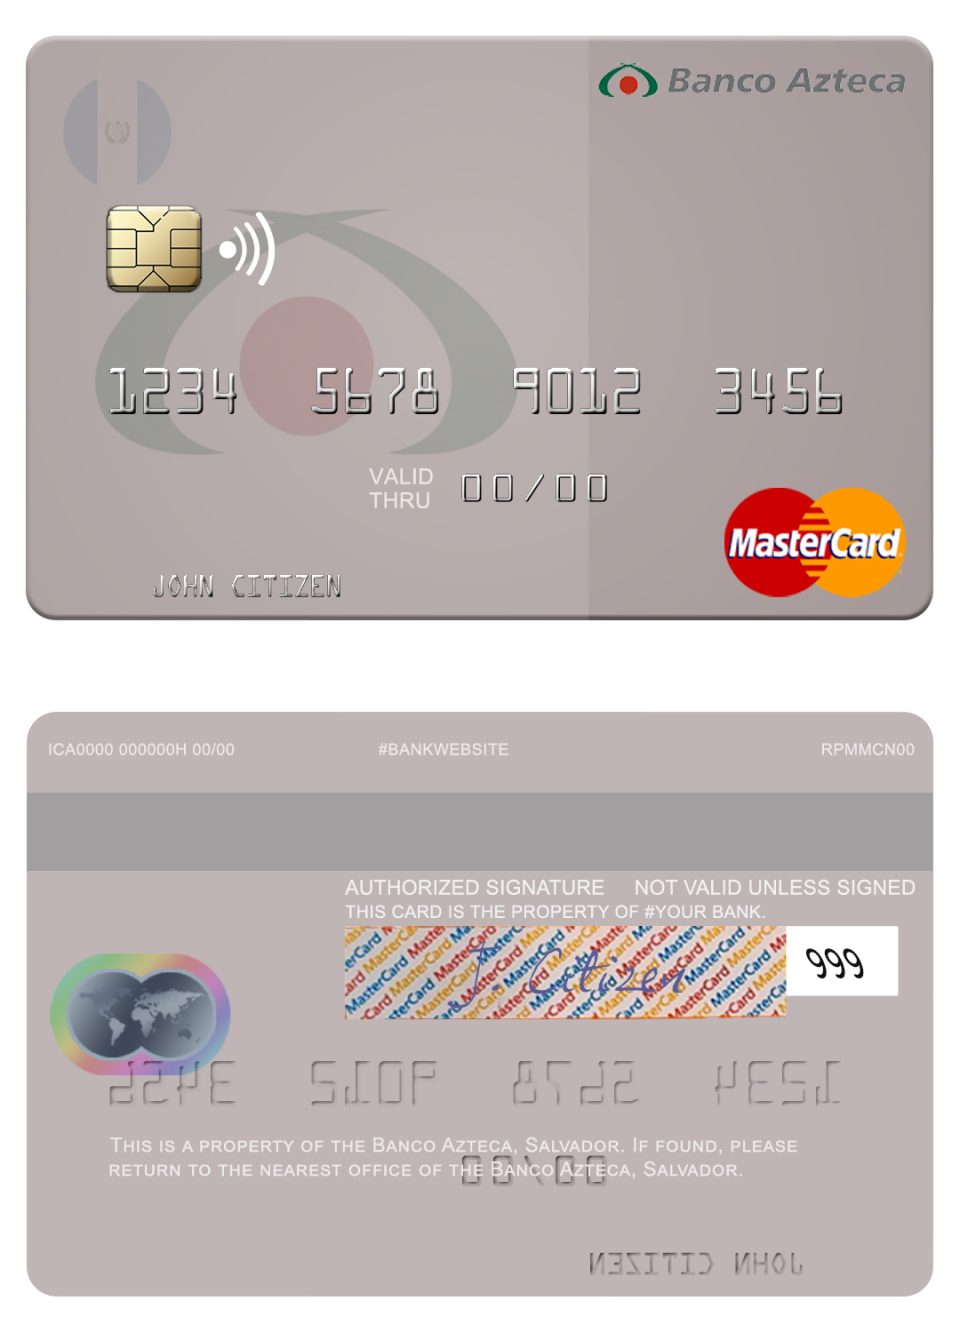 Fillable Salvador Banco Azteca mastercard credit card Templates